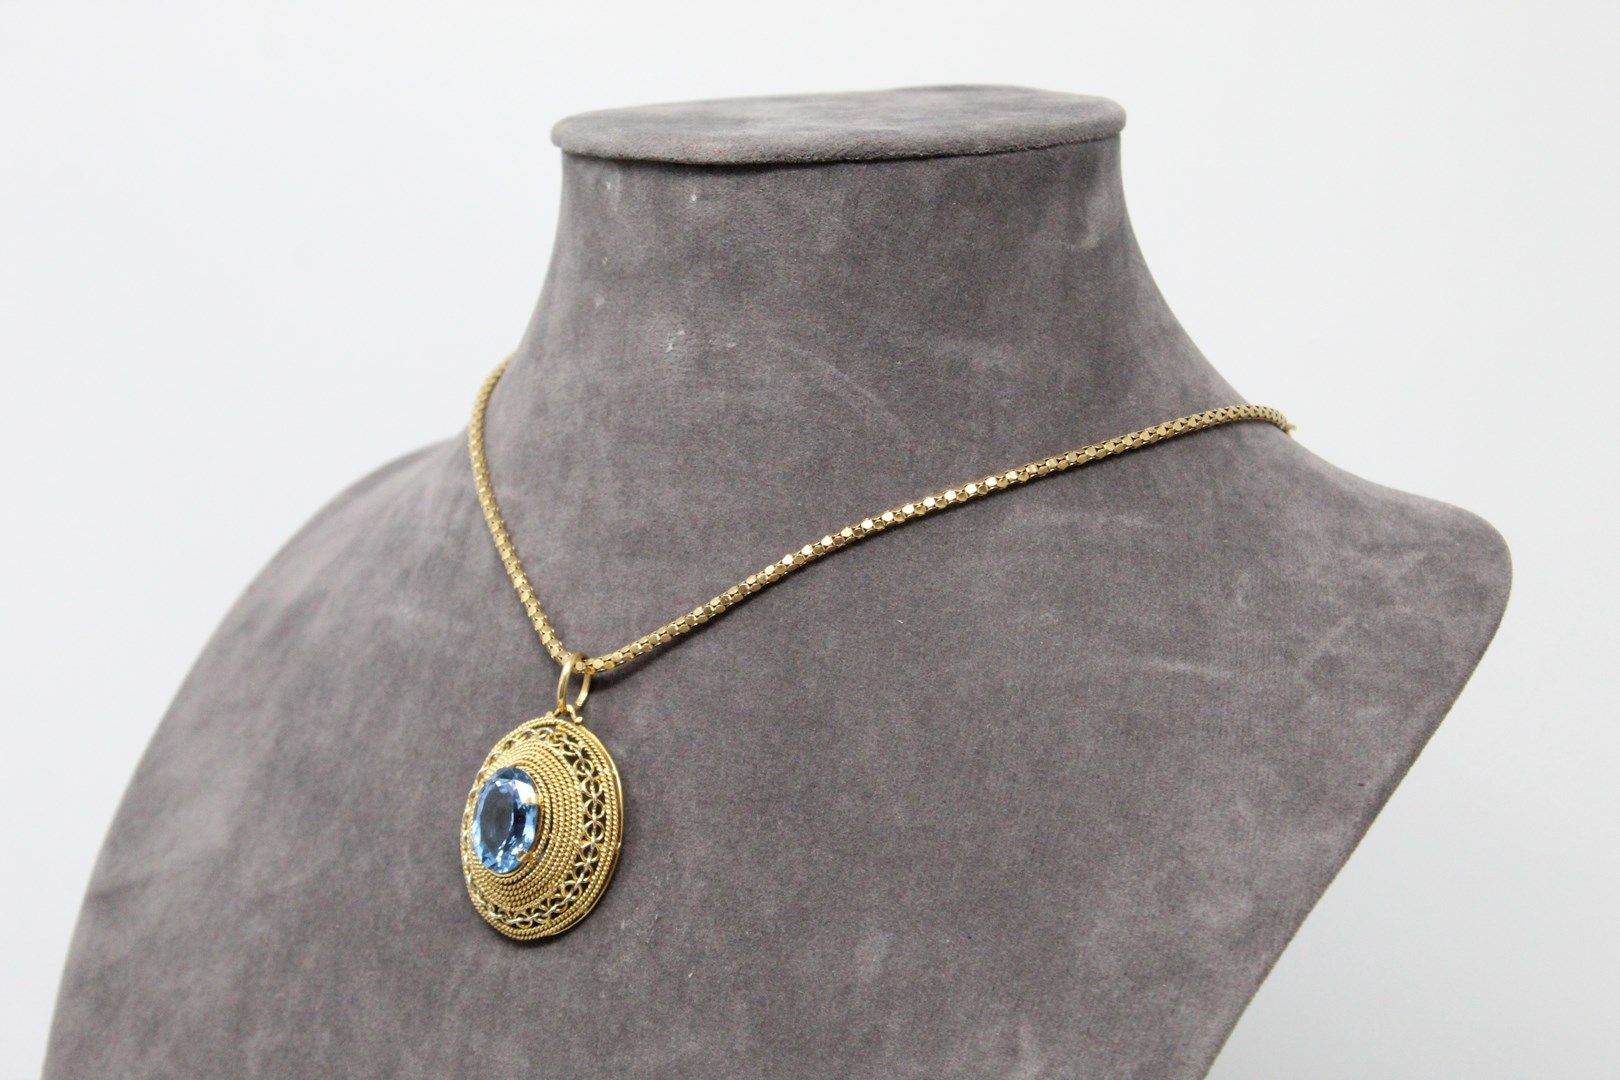 Null 18K(750)黄金项链，持有一个合成蓝色尖晶石的吊坠。

项链尺寸：42厘米。毛重：18.31克。